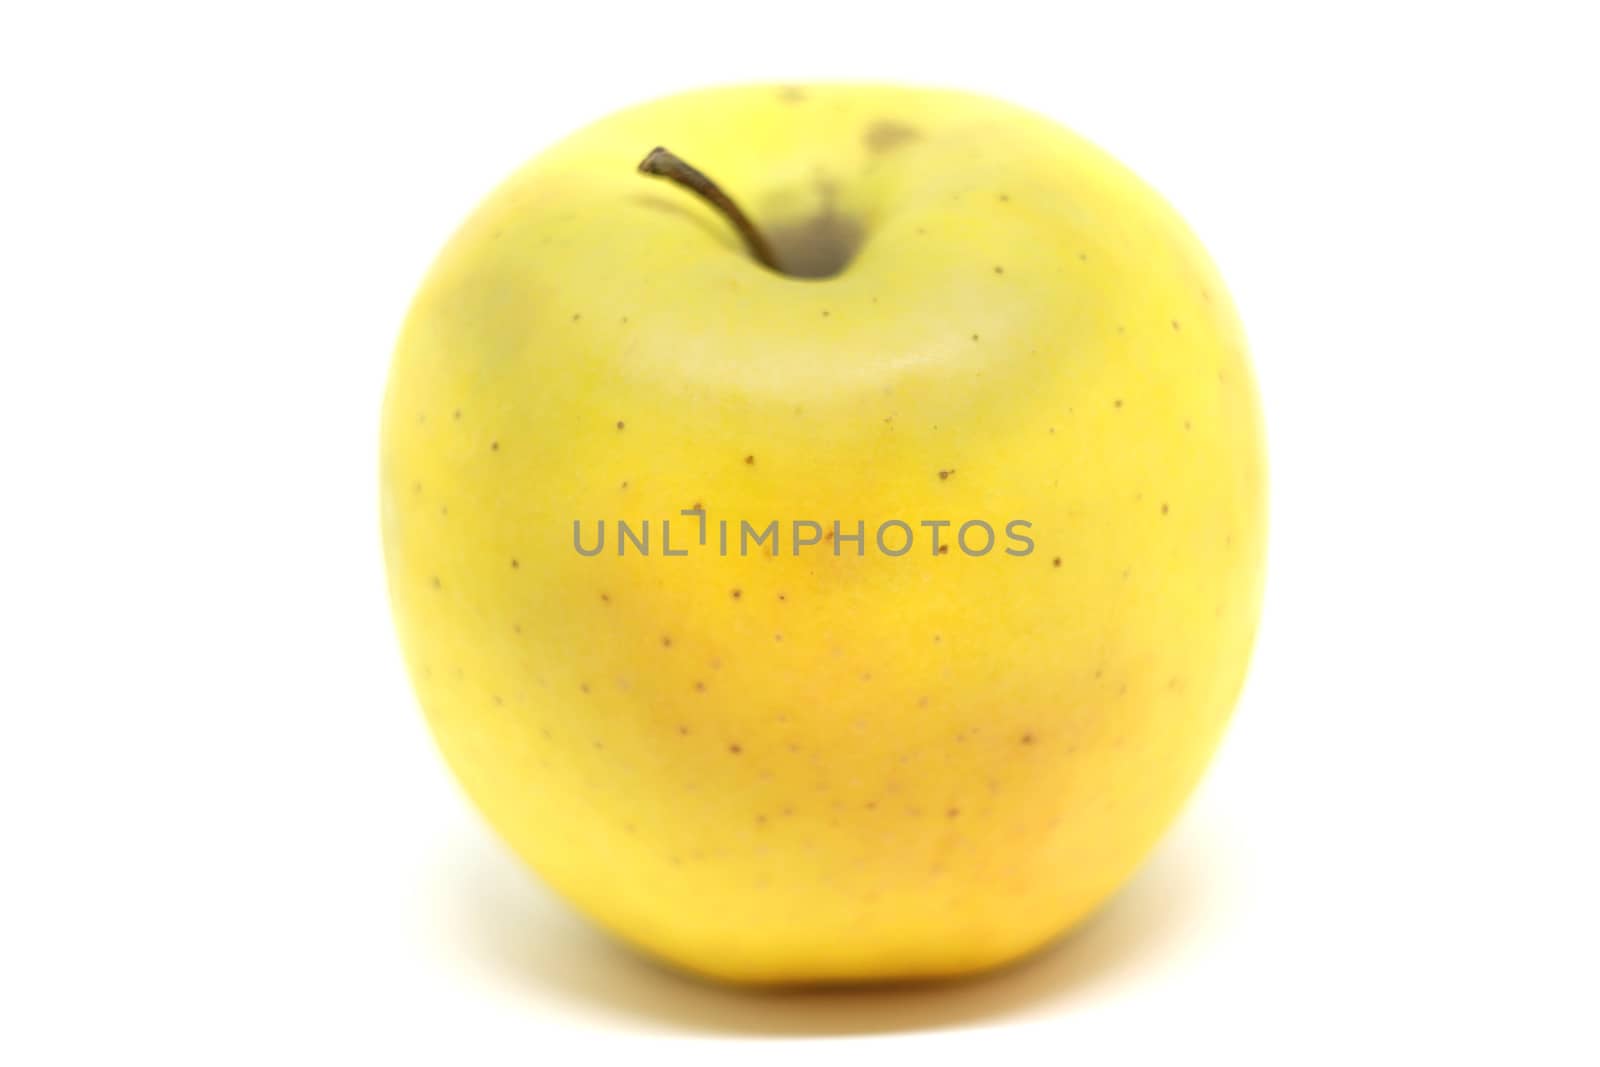 Fresh yellow apple isolated on white background.